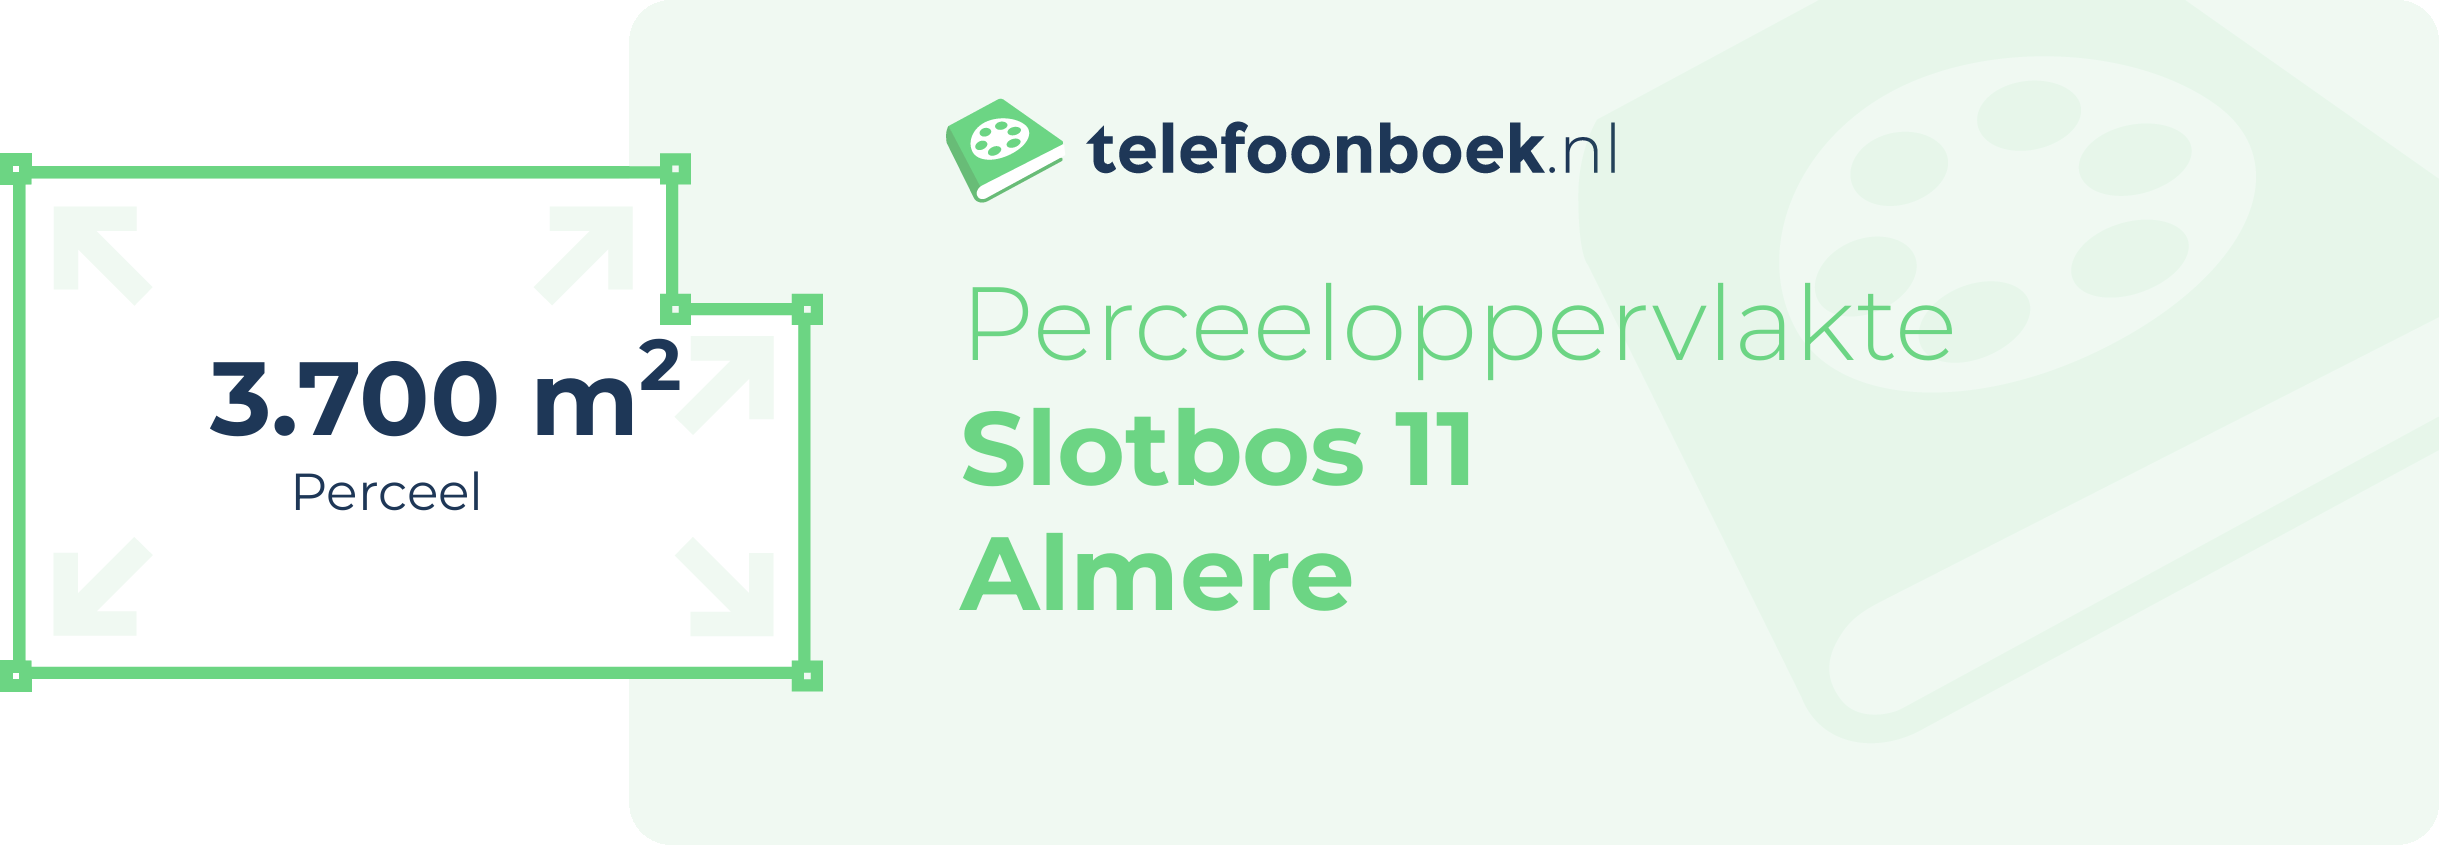 Perceeloppervlakte Slotbos 11 Almere